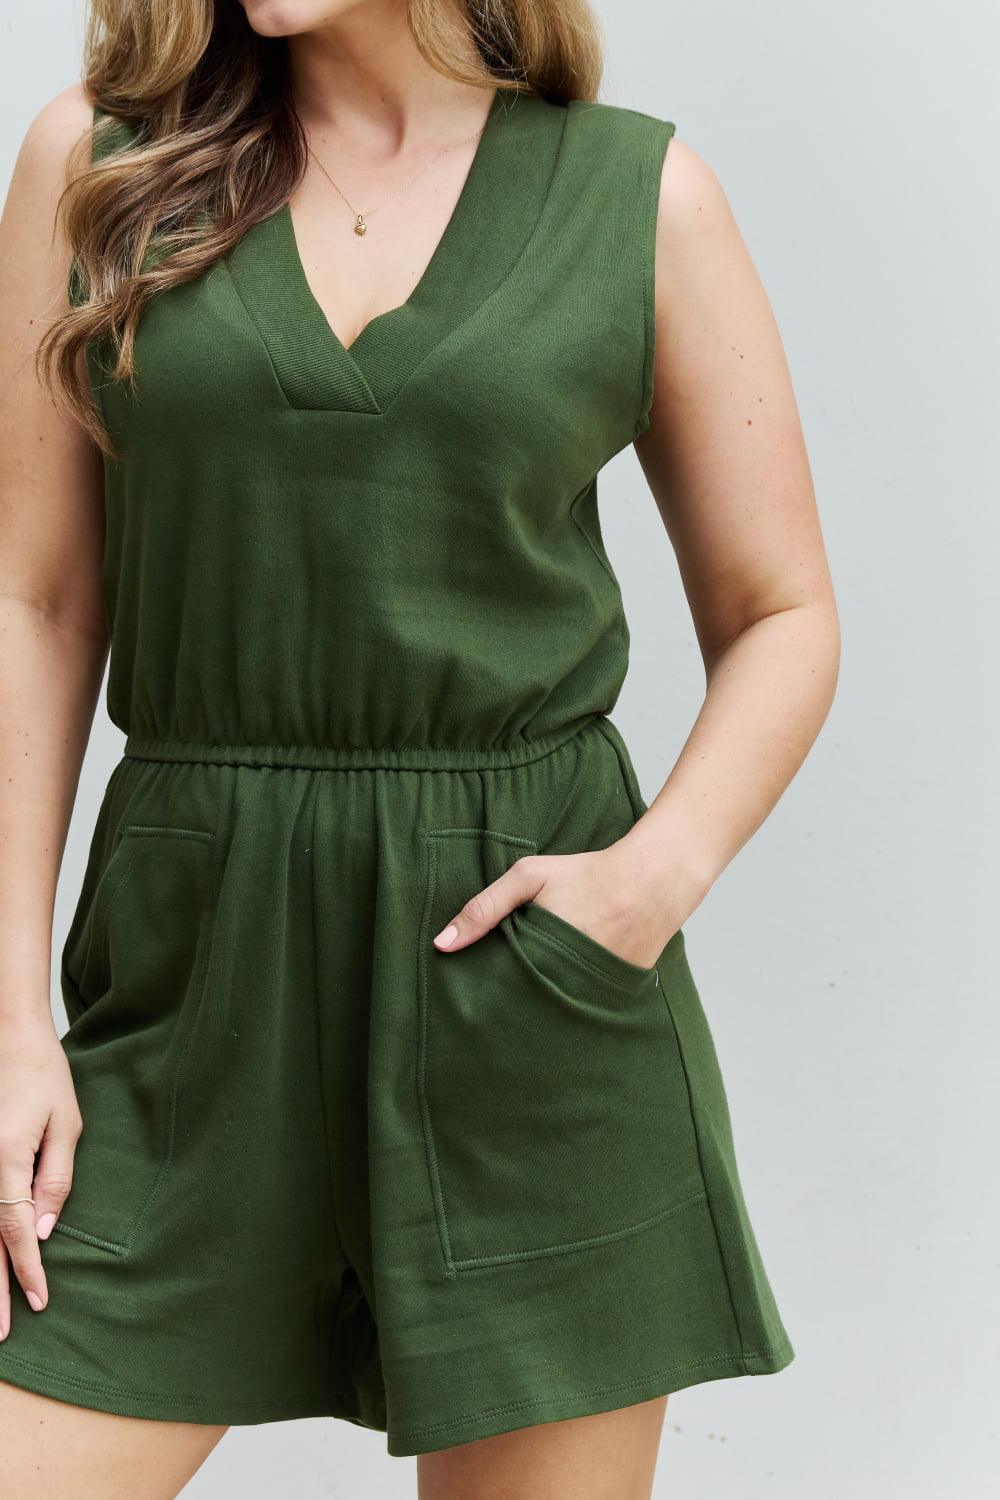 Bona Fide Fashion - Full Size V-Neck Sleeveless Romper in Army Green - Women Fashion - Bona Fide Fashion